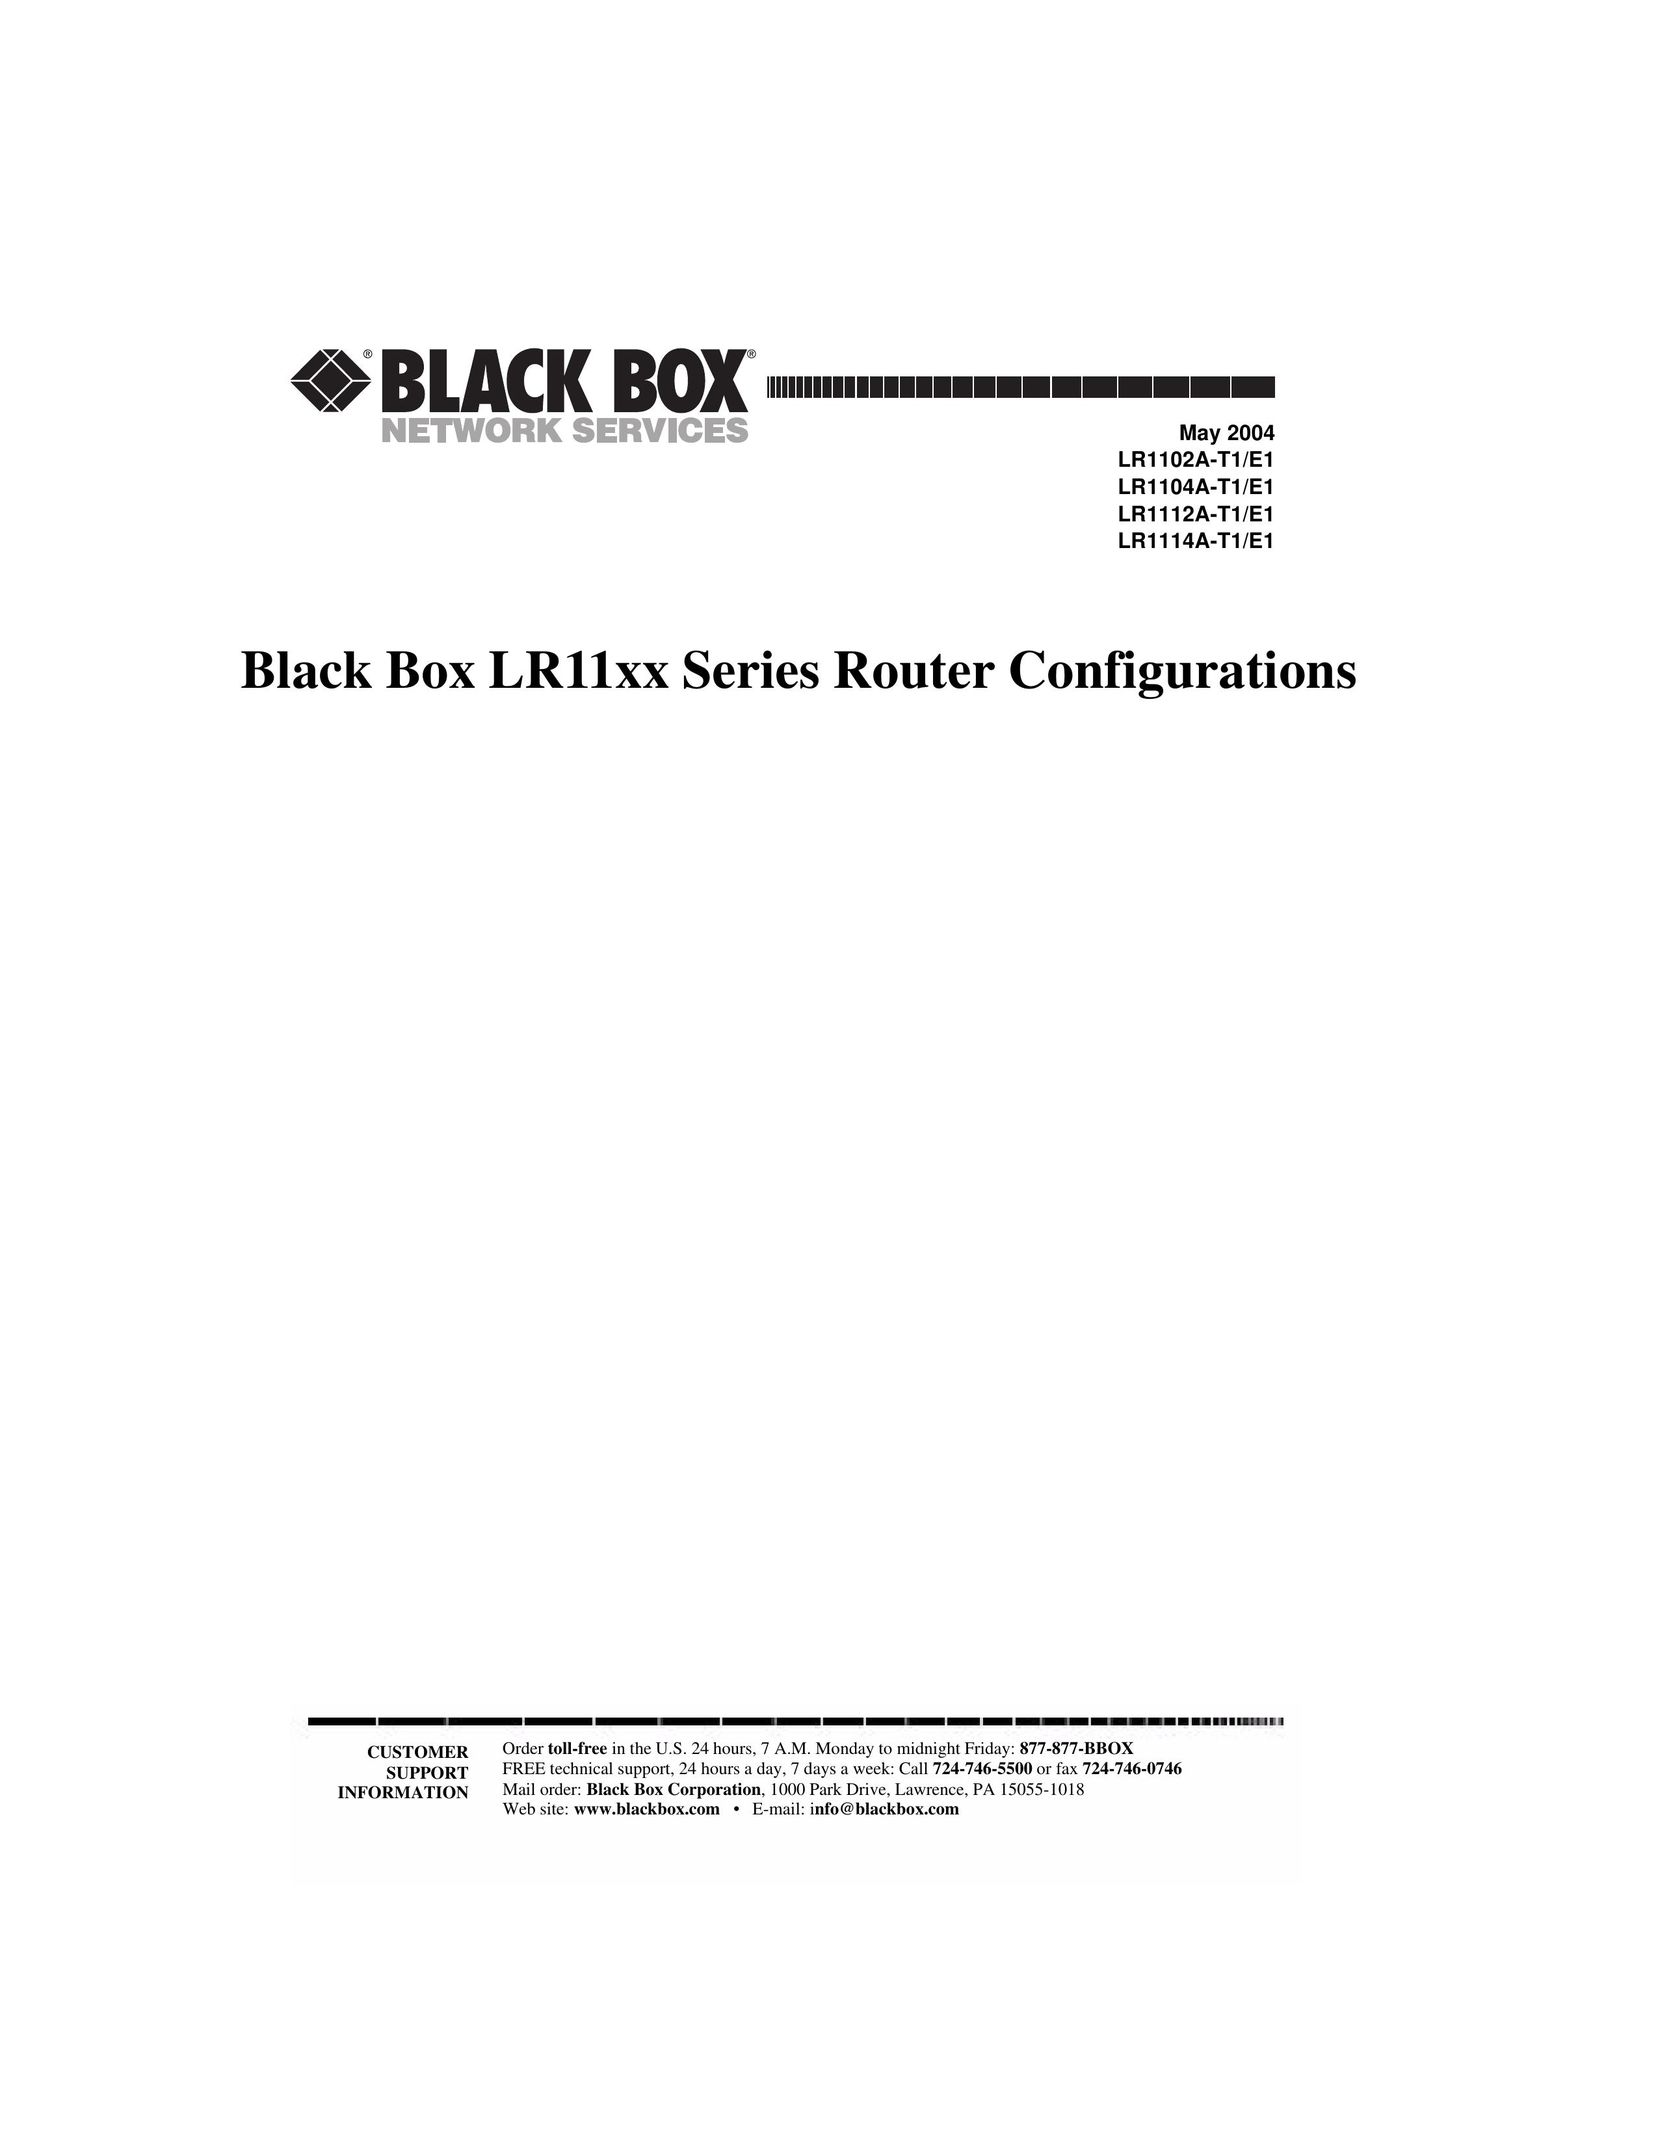 Black Box LR1112A-T1/E1 Network Router User Manual